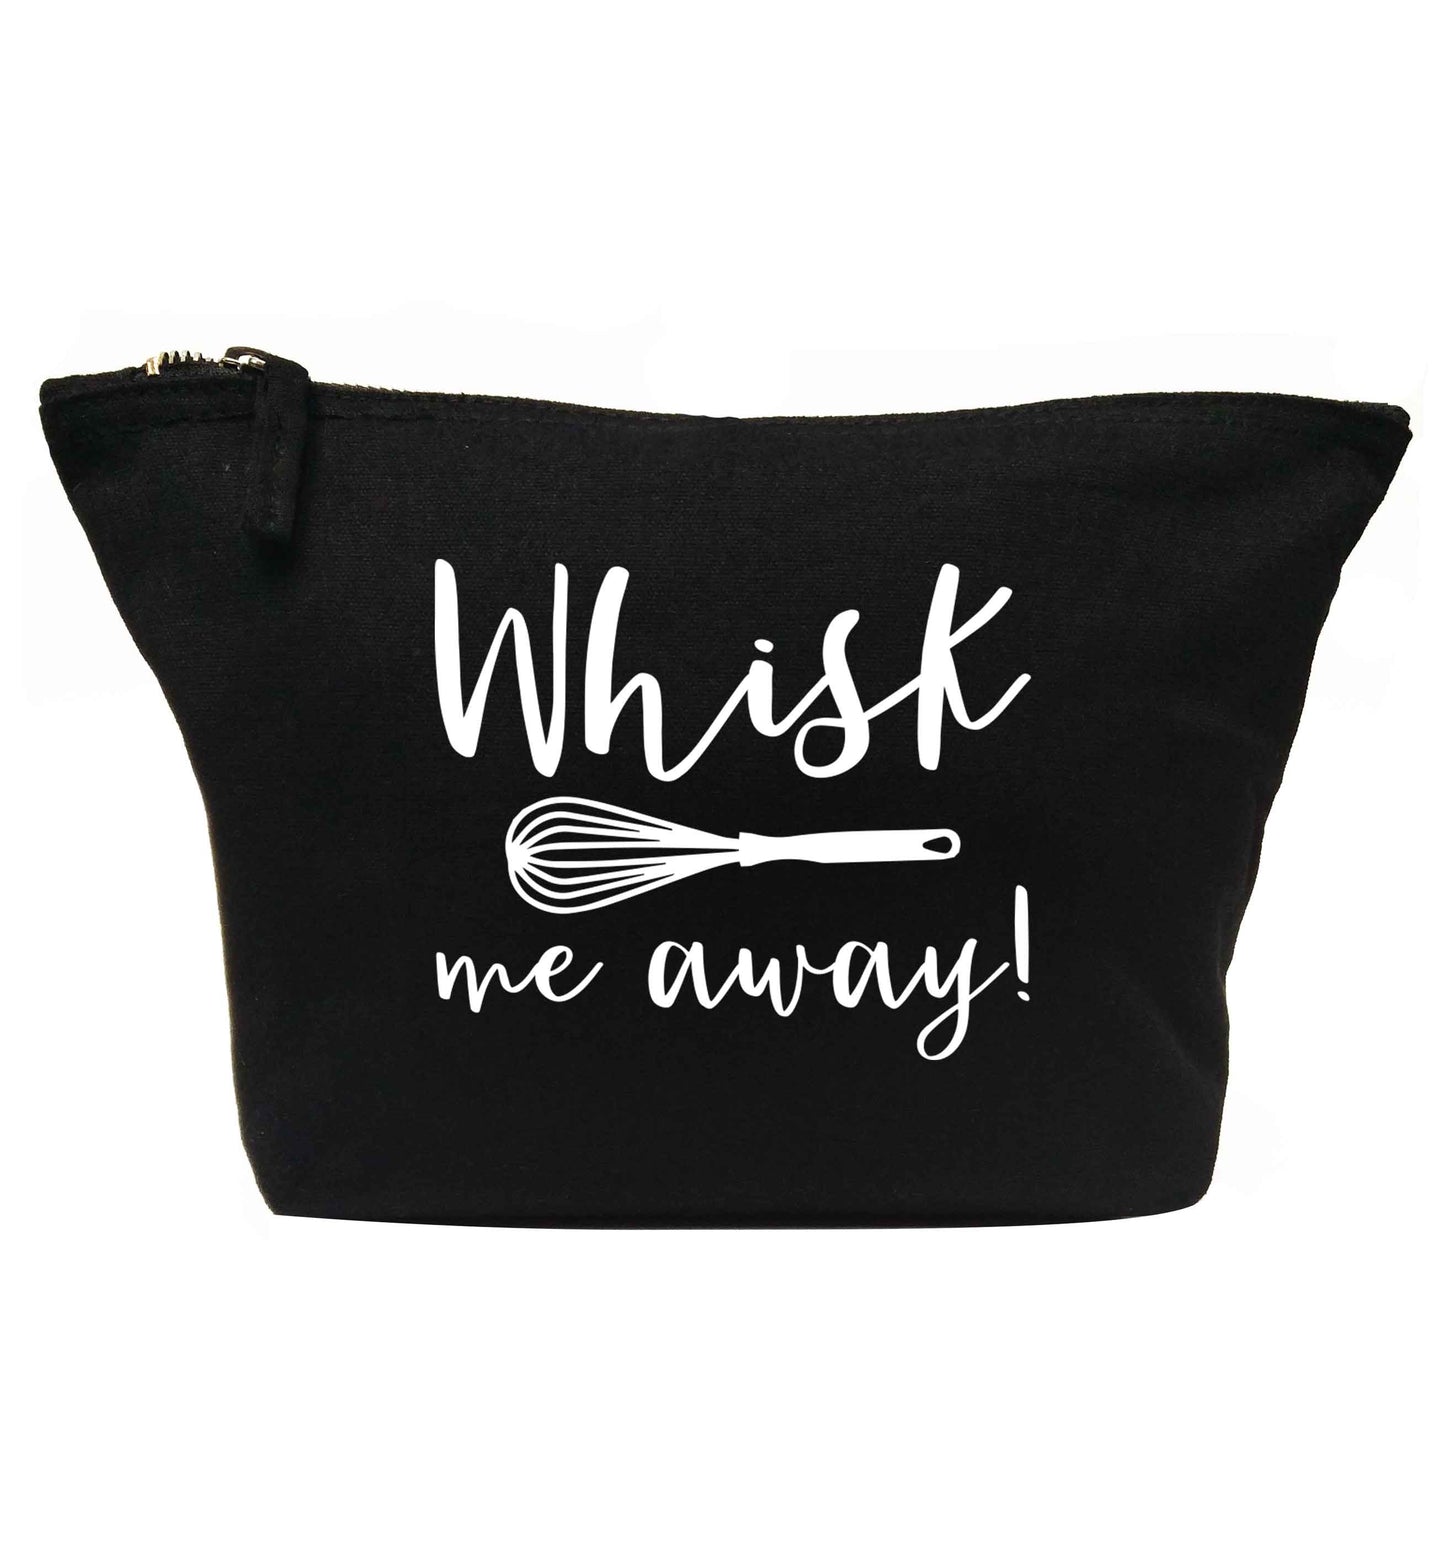 Whisk me away | makeup / wash bag